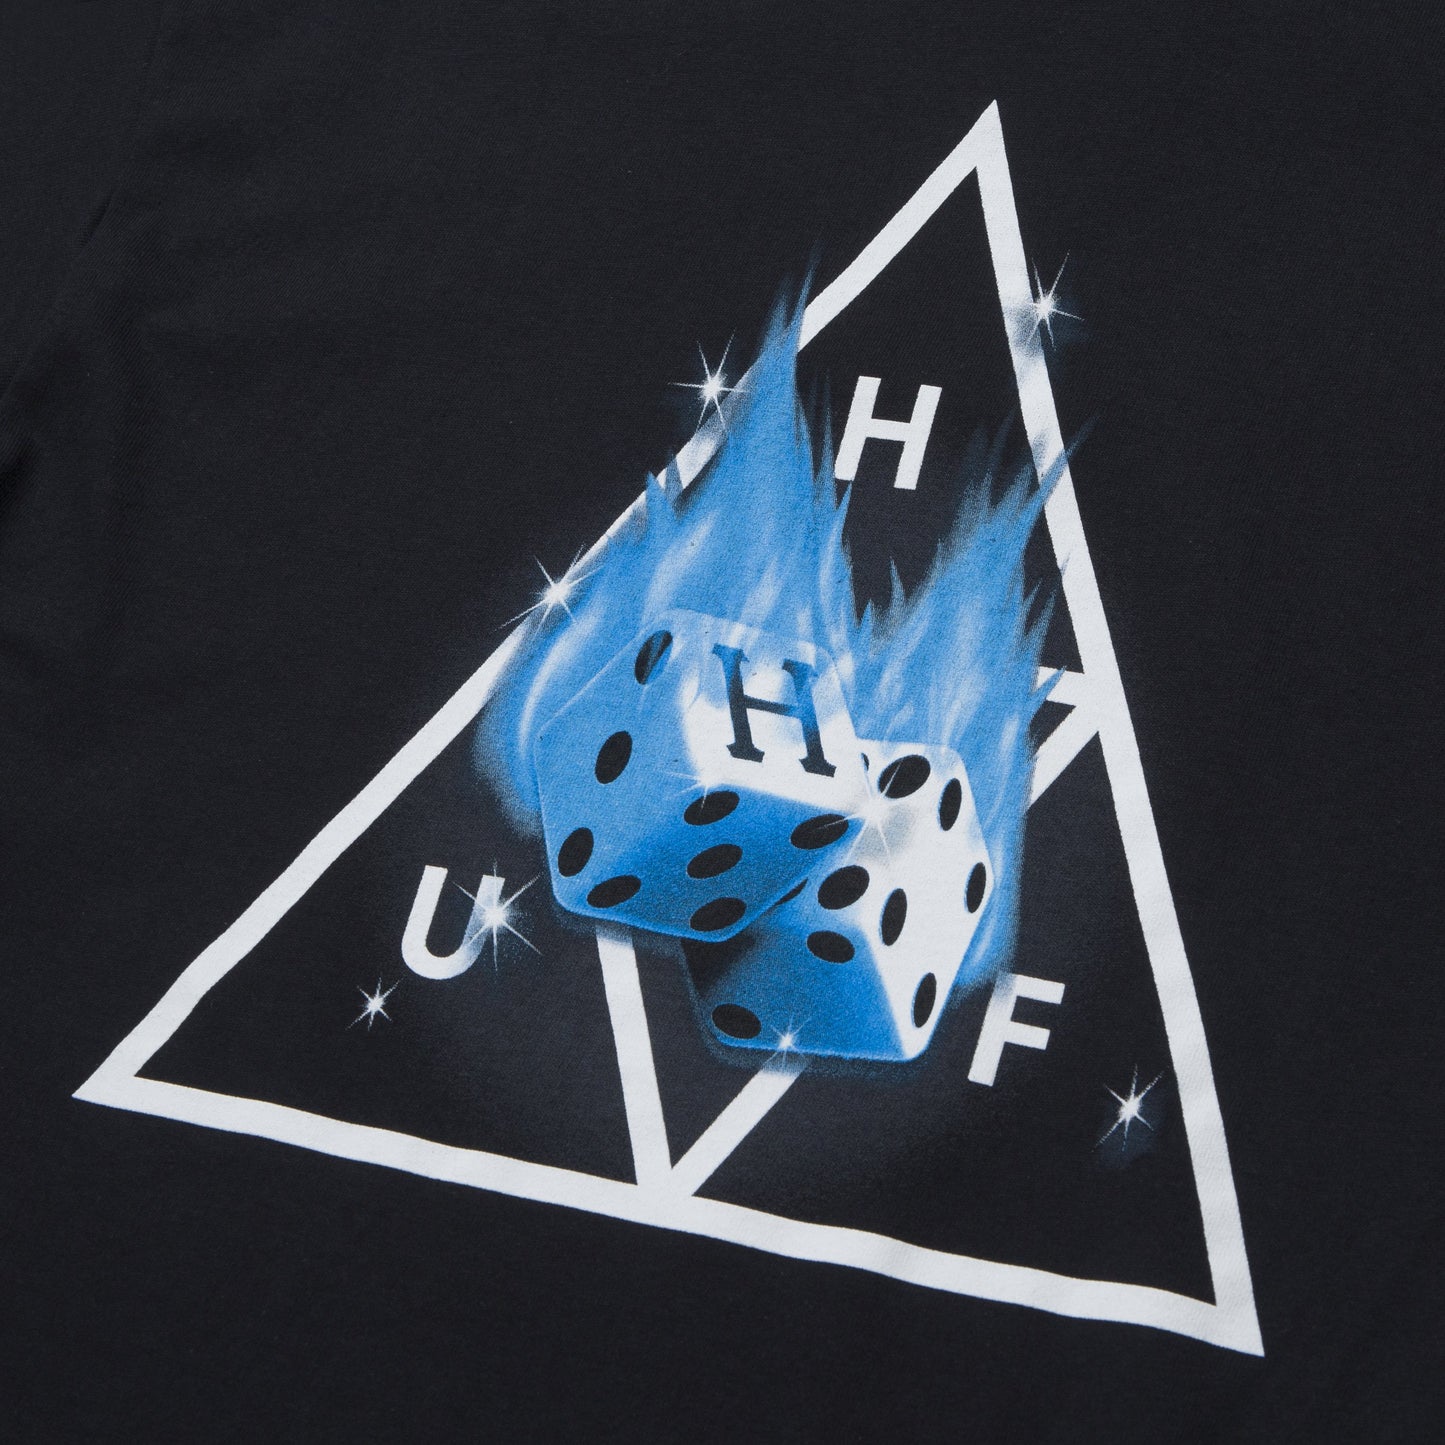 HUF Hot Dice Triple Triangle T-Shirt